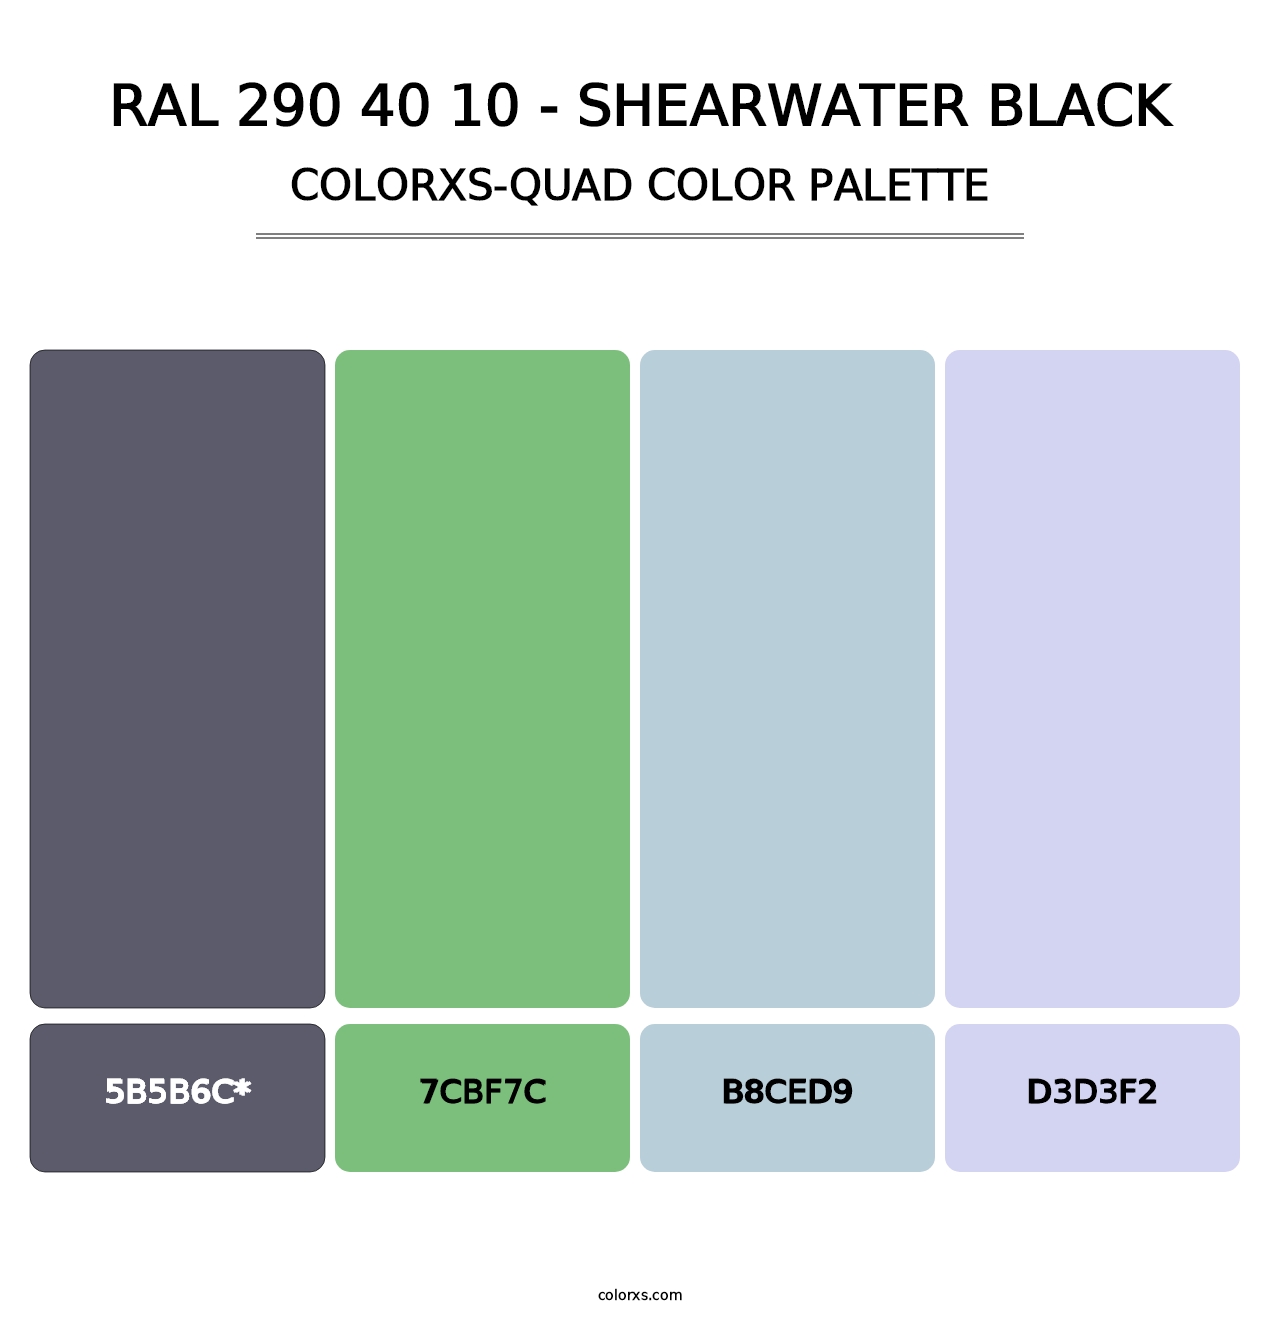 RAL 290 40 10 - Shearwater Black - Colorxs Quad Palette